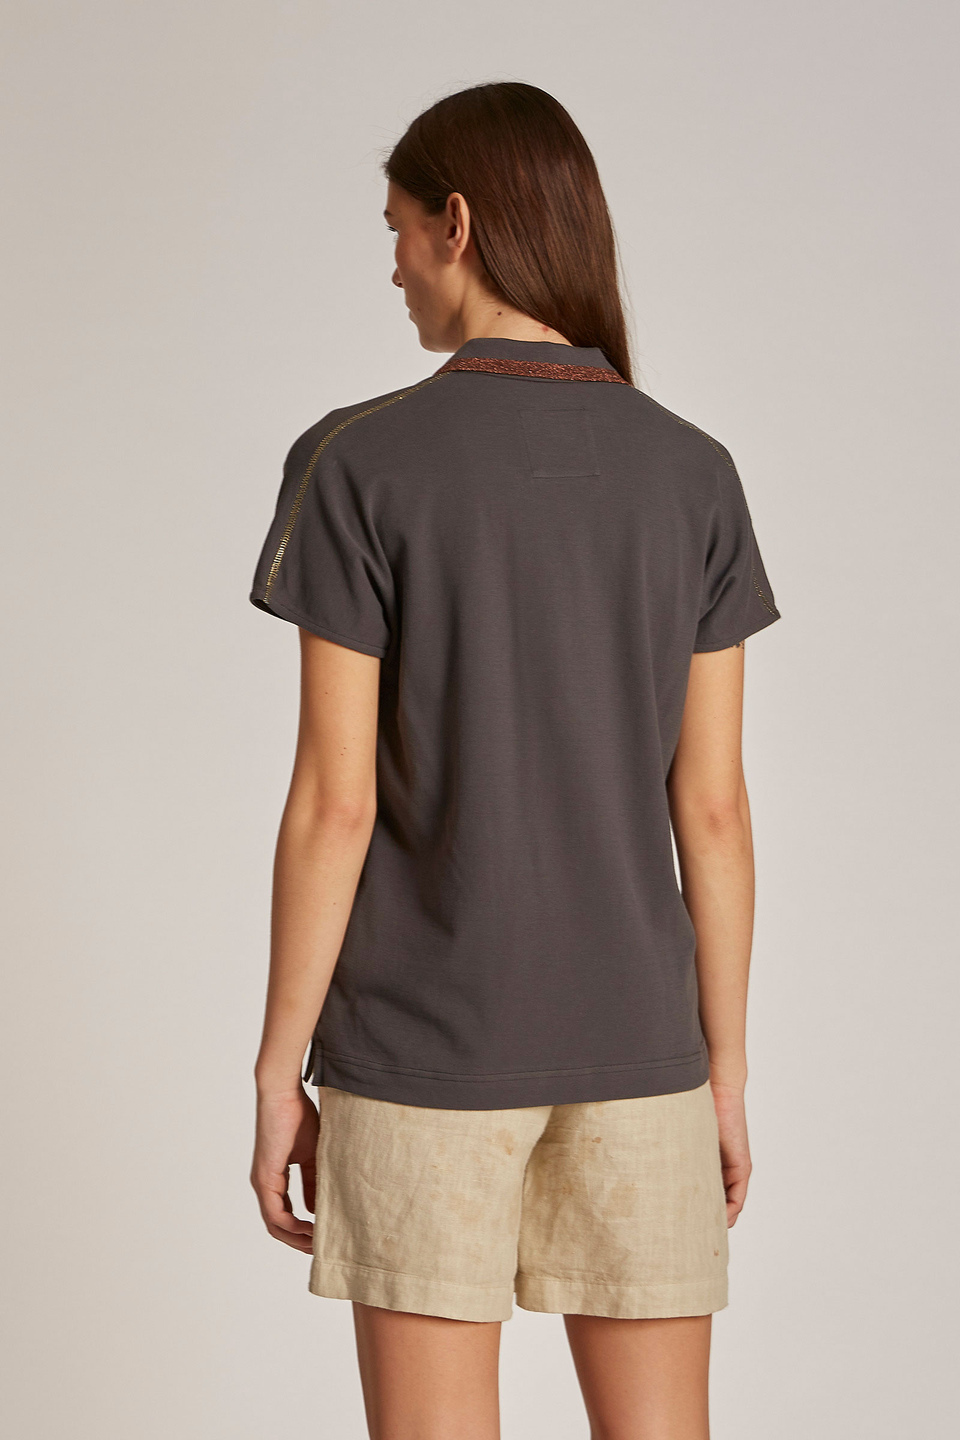 Damen-Poloshirt mit kurzem Arm aus Piqué im Regular Fit | La Martina - Official Online Shop